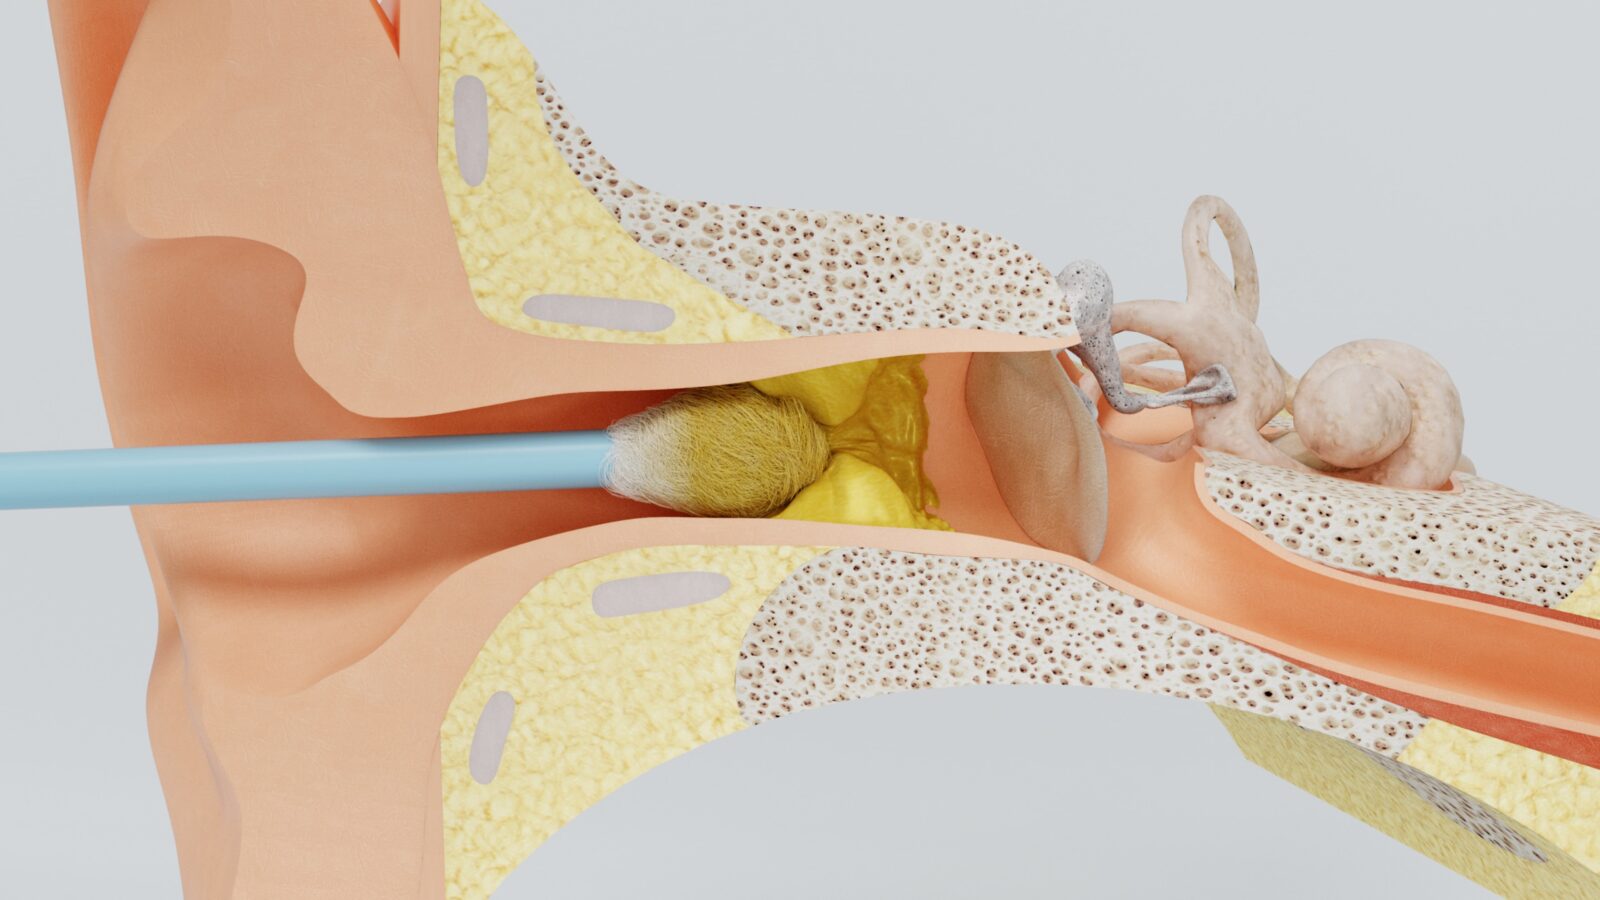 earwax buildup in the ear canal